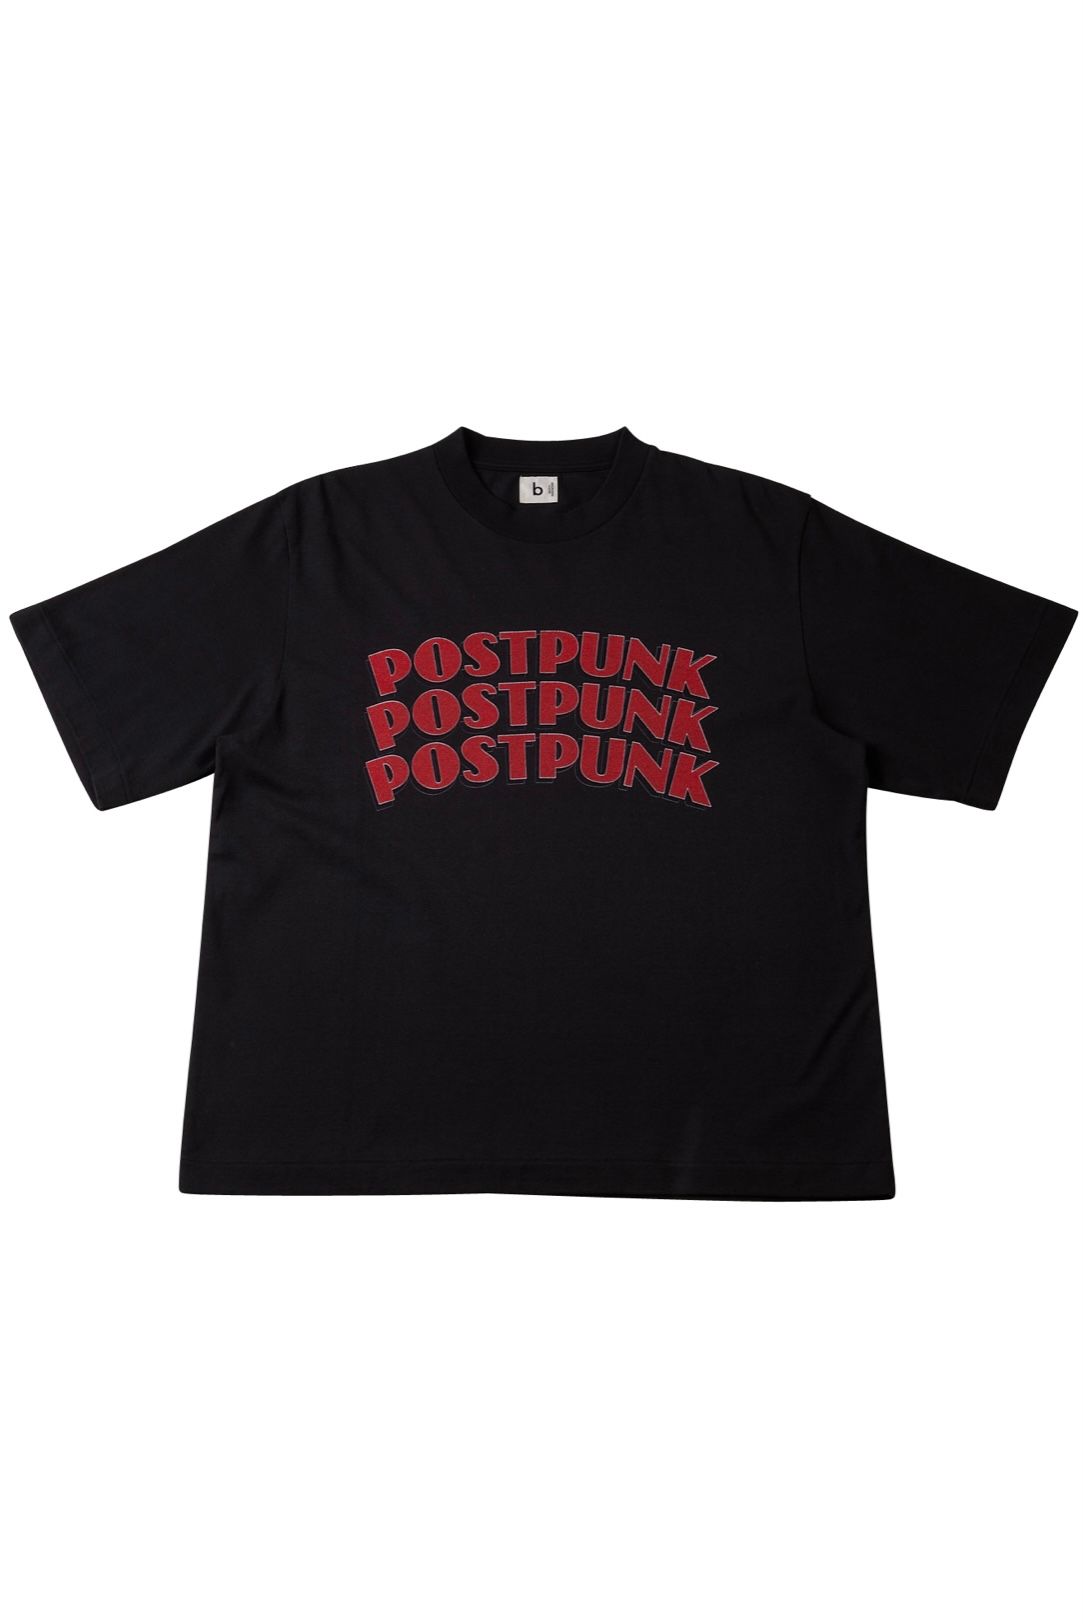 blurhms ROOTSTOCK - POSTPUNK Print Tee STANDARD- black-men 23ss 